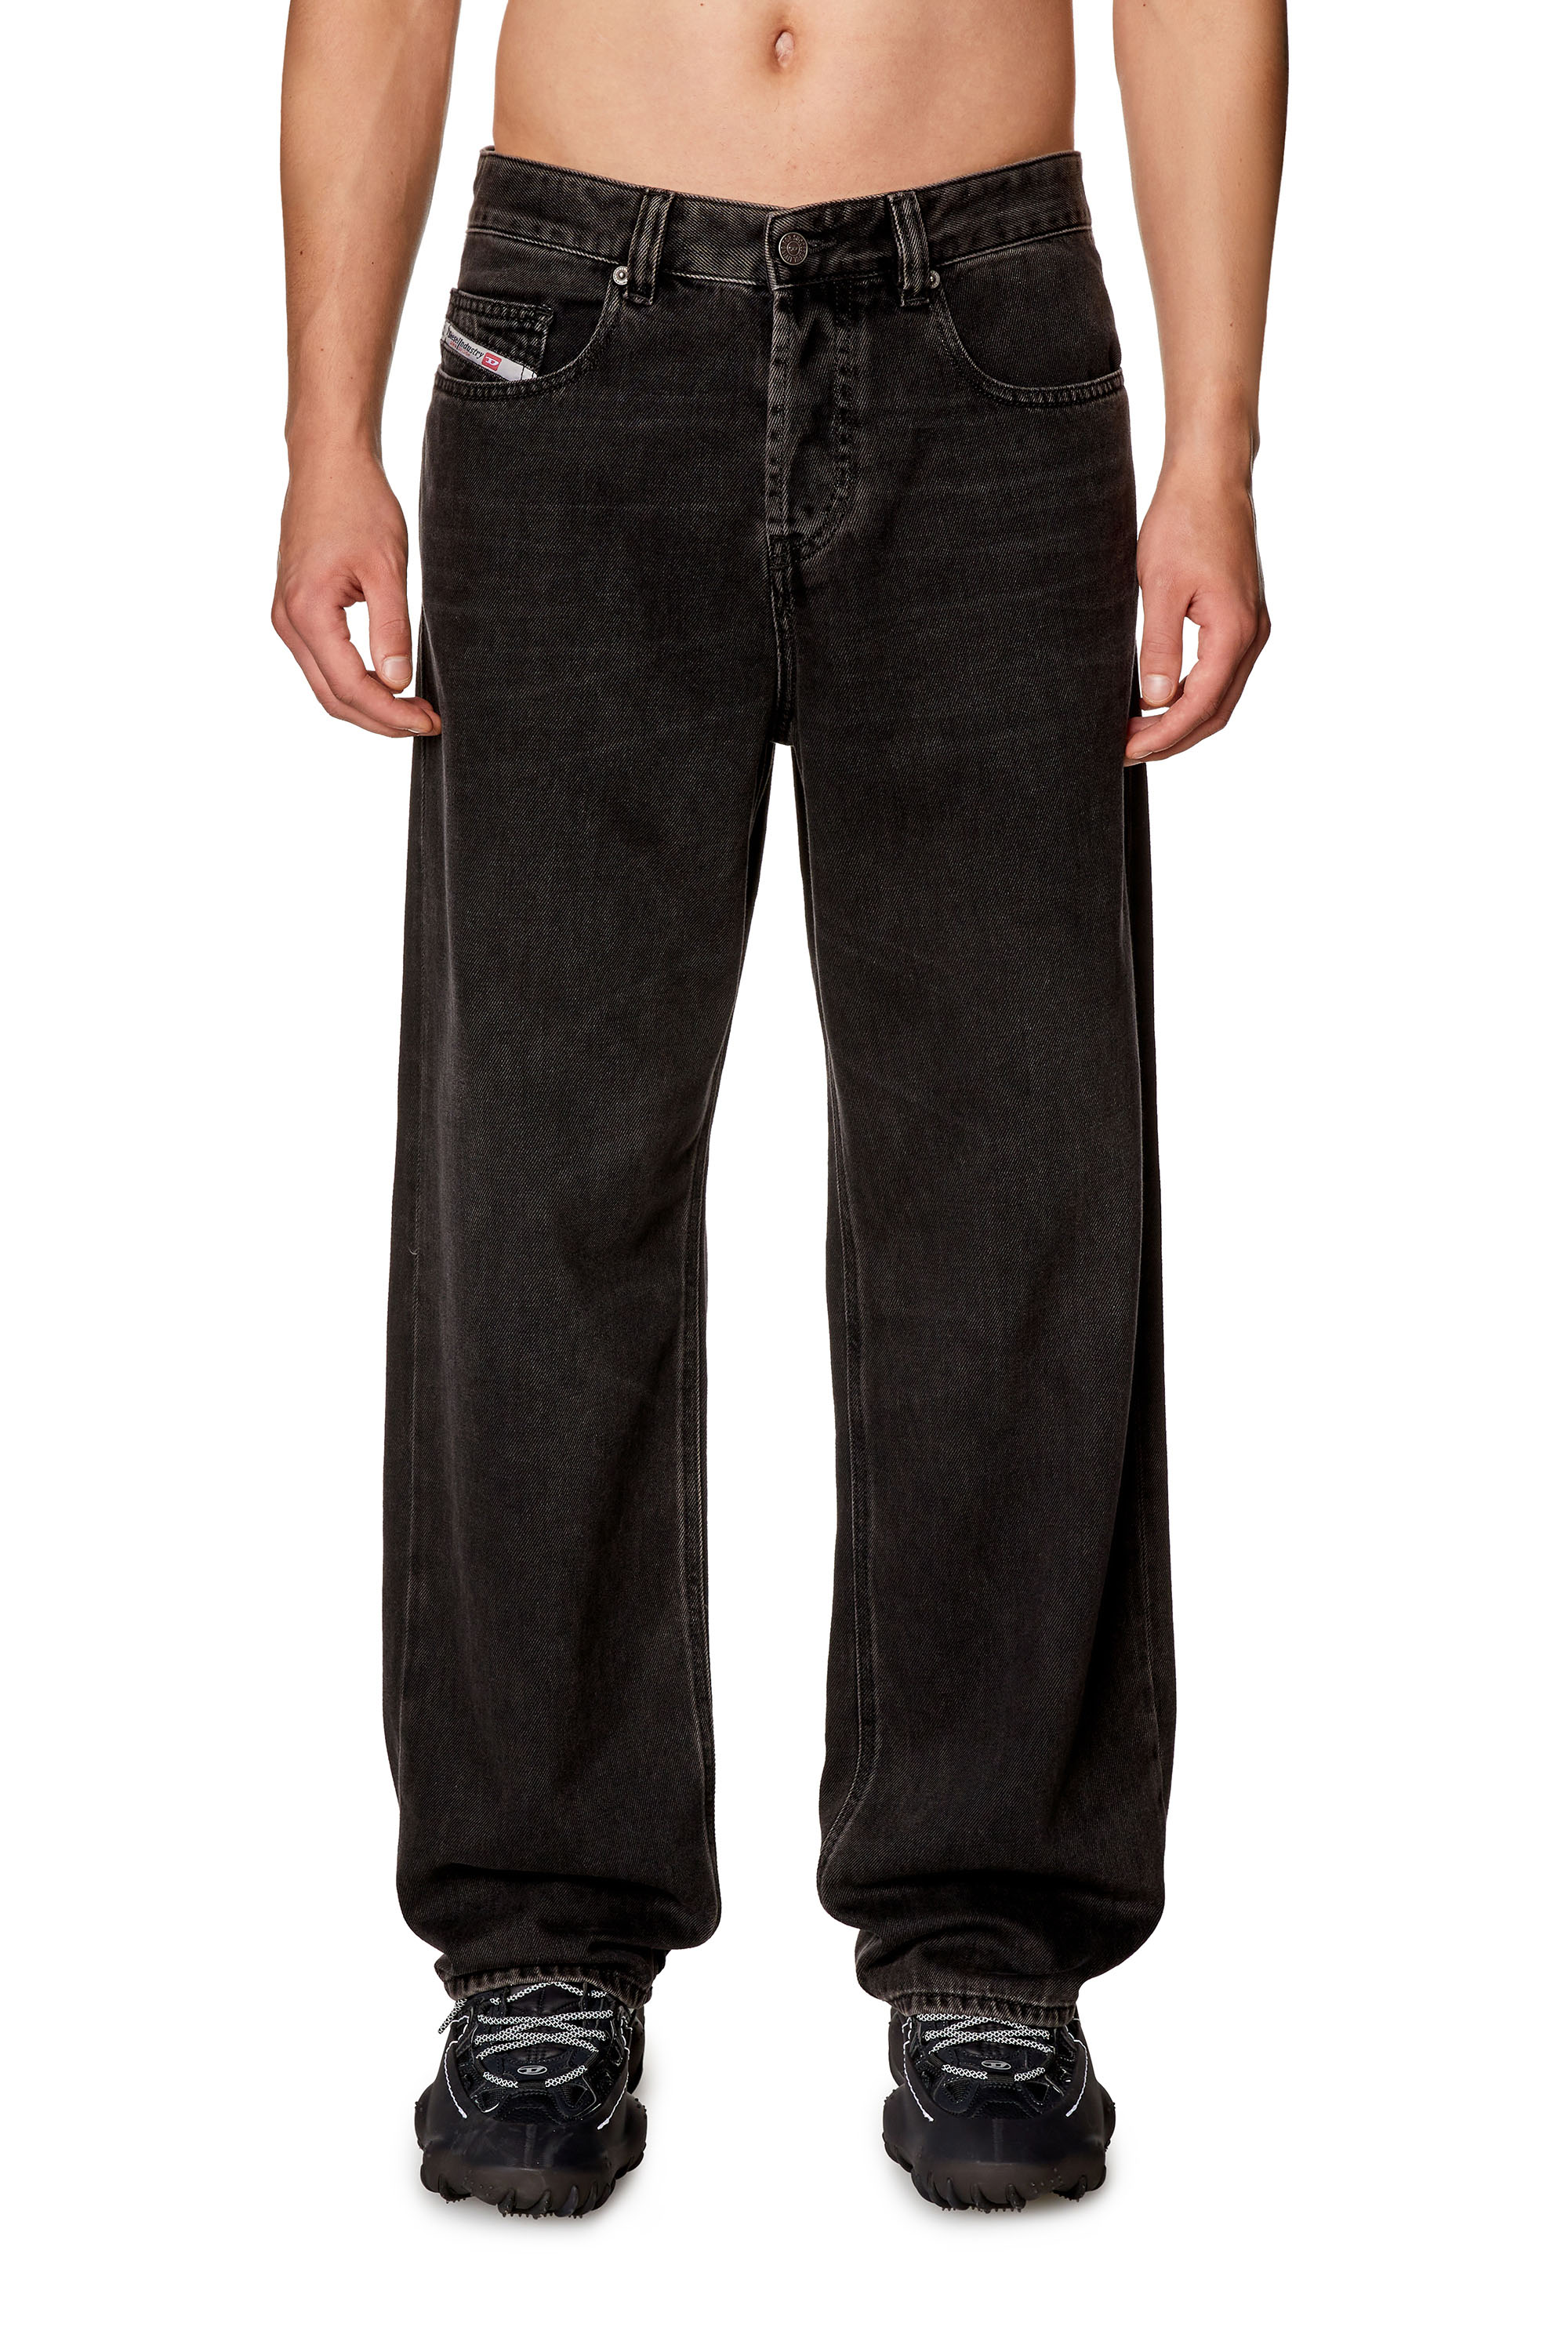 Straight Jeans 2001 D-Macro 09I35, Black/Dark grey - Jeans